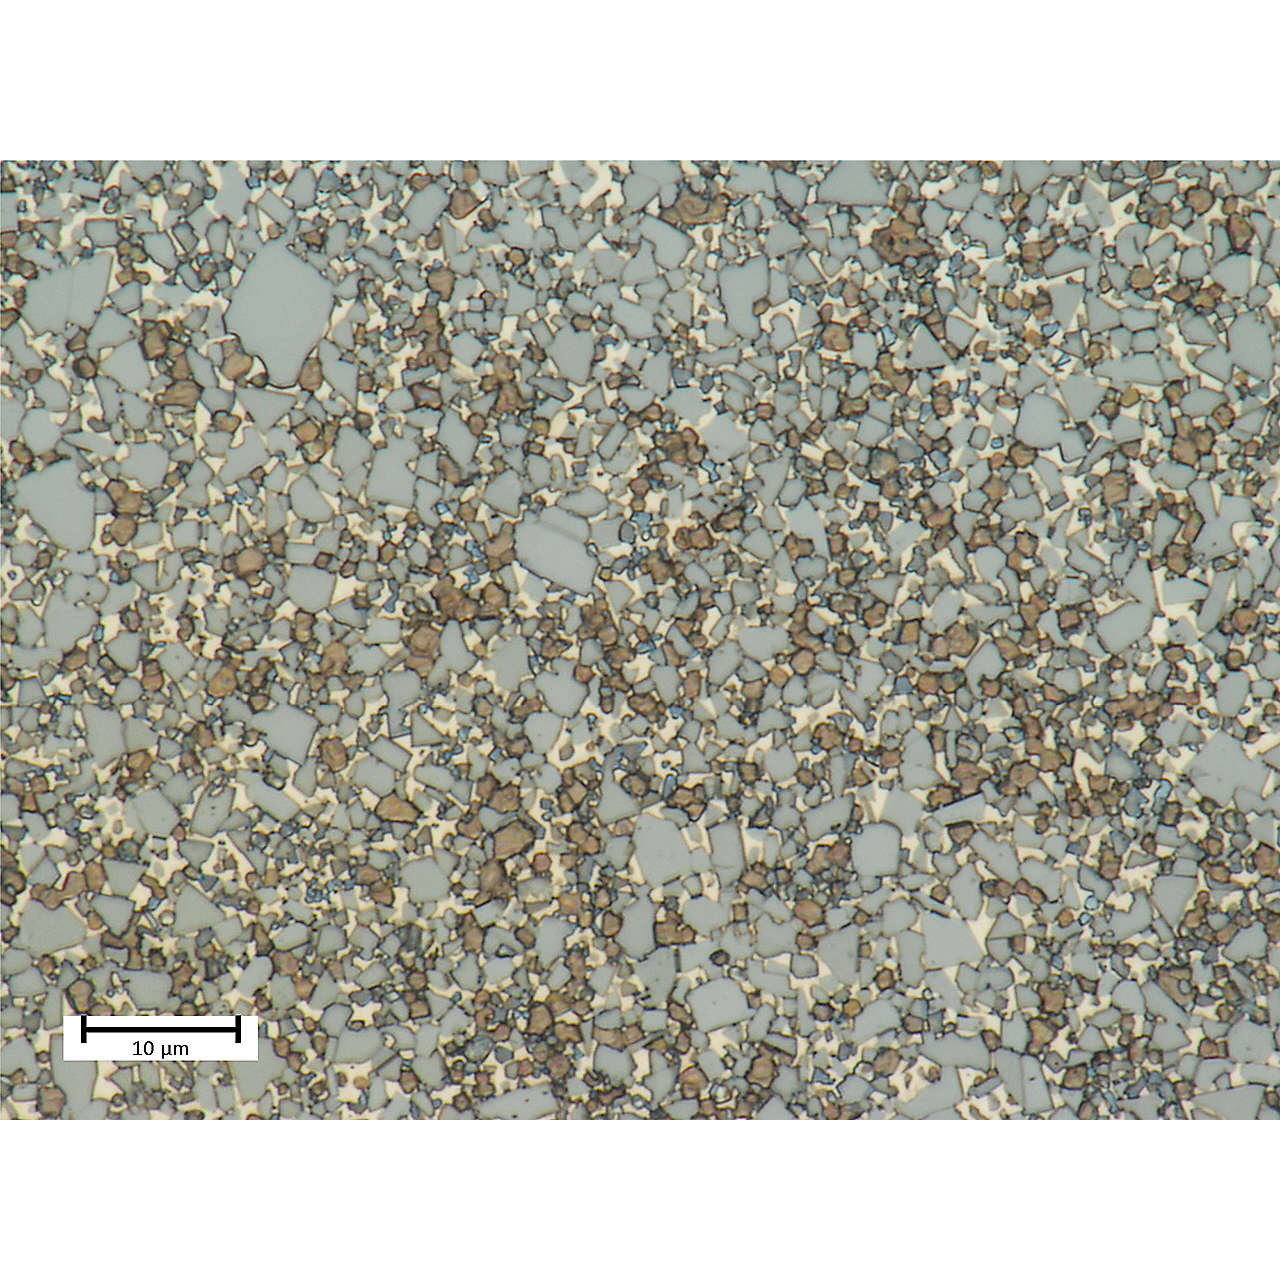 cemented carbide with medium-coarse grains